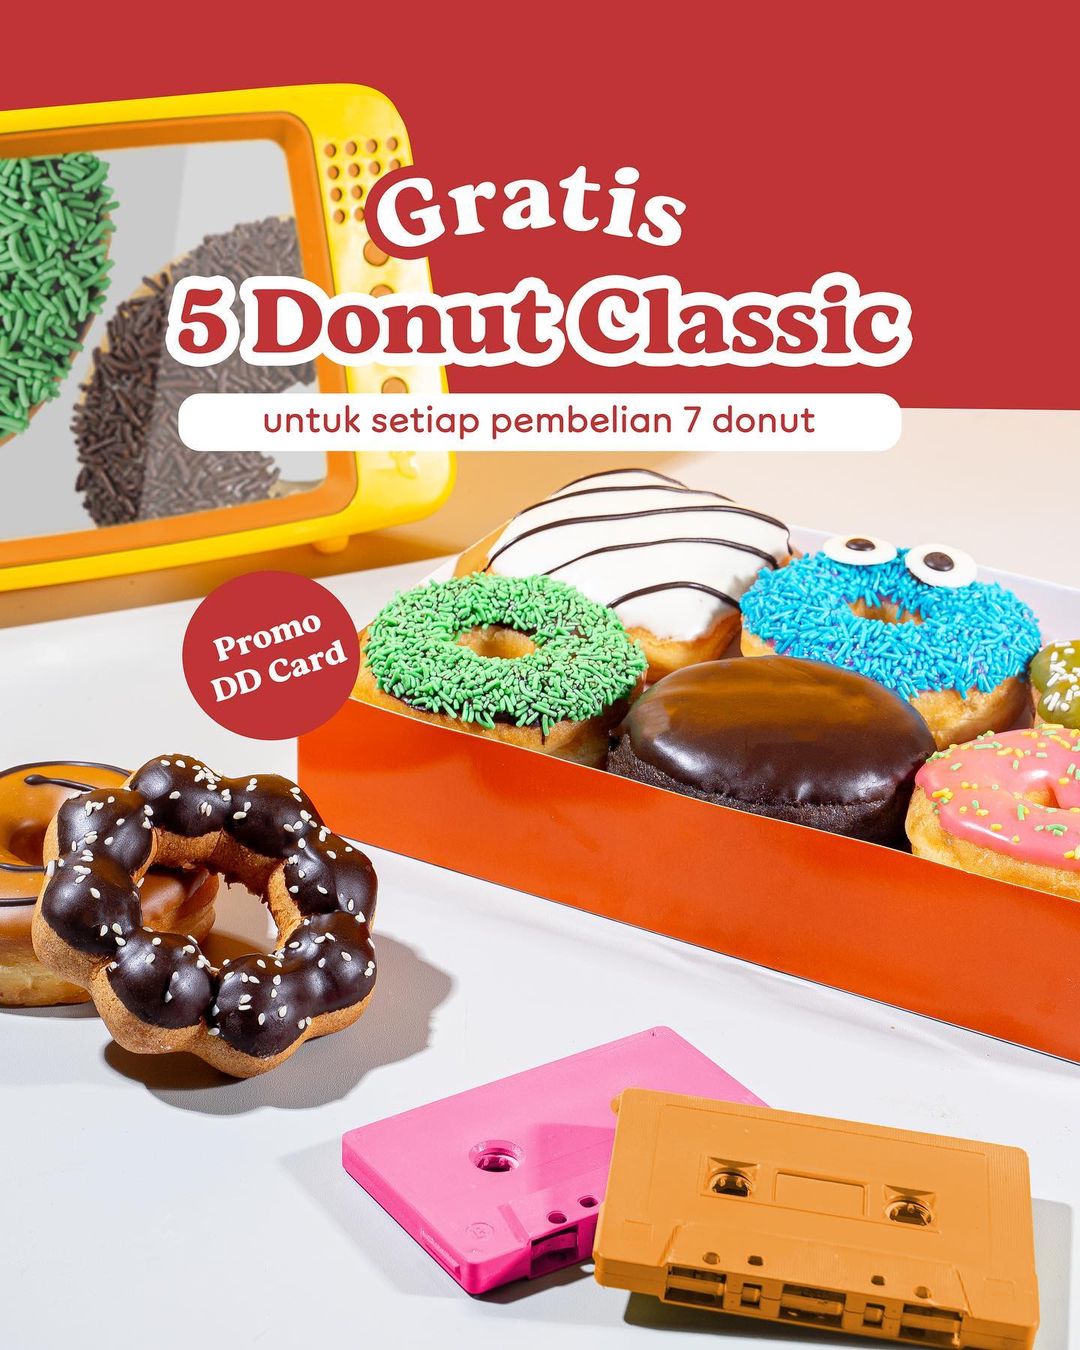 DUNKIN DONUTS Promo DD CARD GRATIS 5 DONUTS CLASSIC